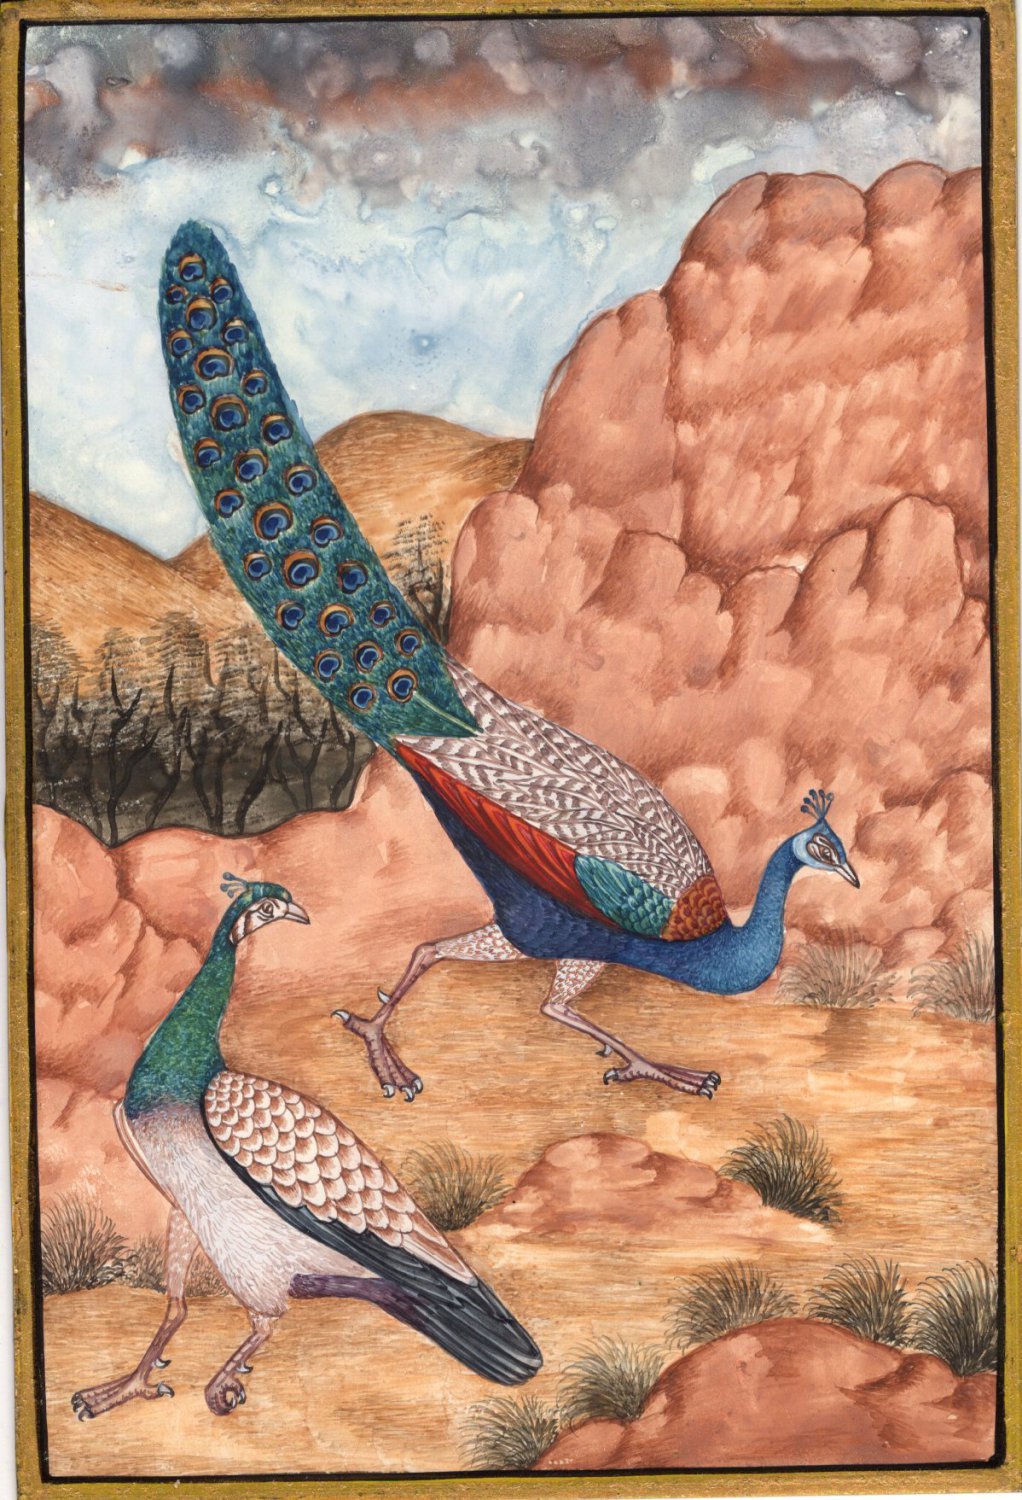 Handmade Peacock Bird Pair Indian Miniature Painting Jewellery Lifelong Memory Personal Gift For Art Lover